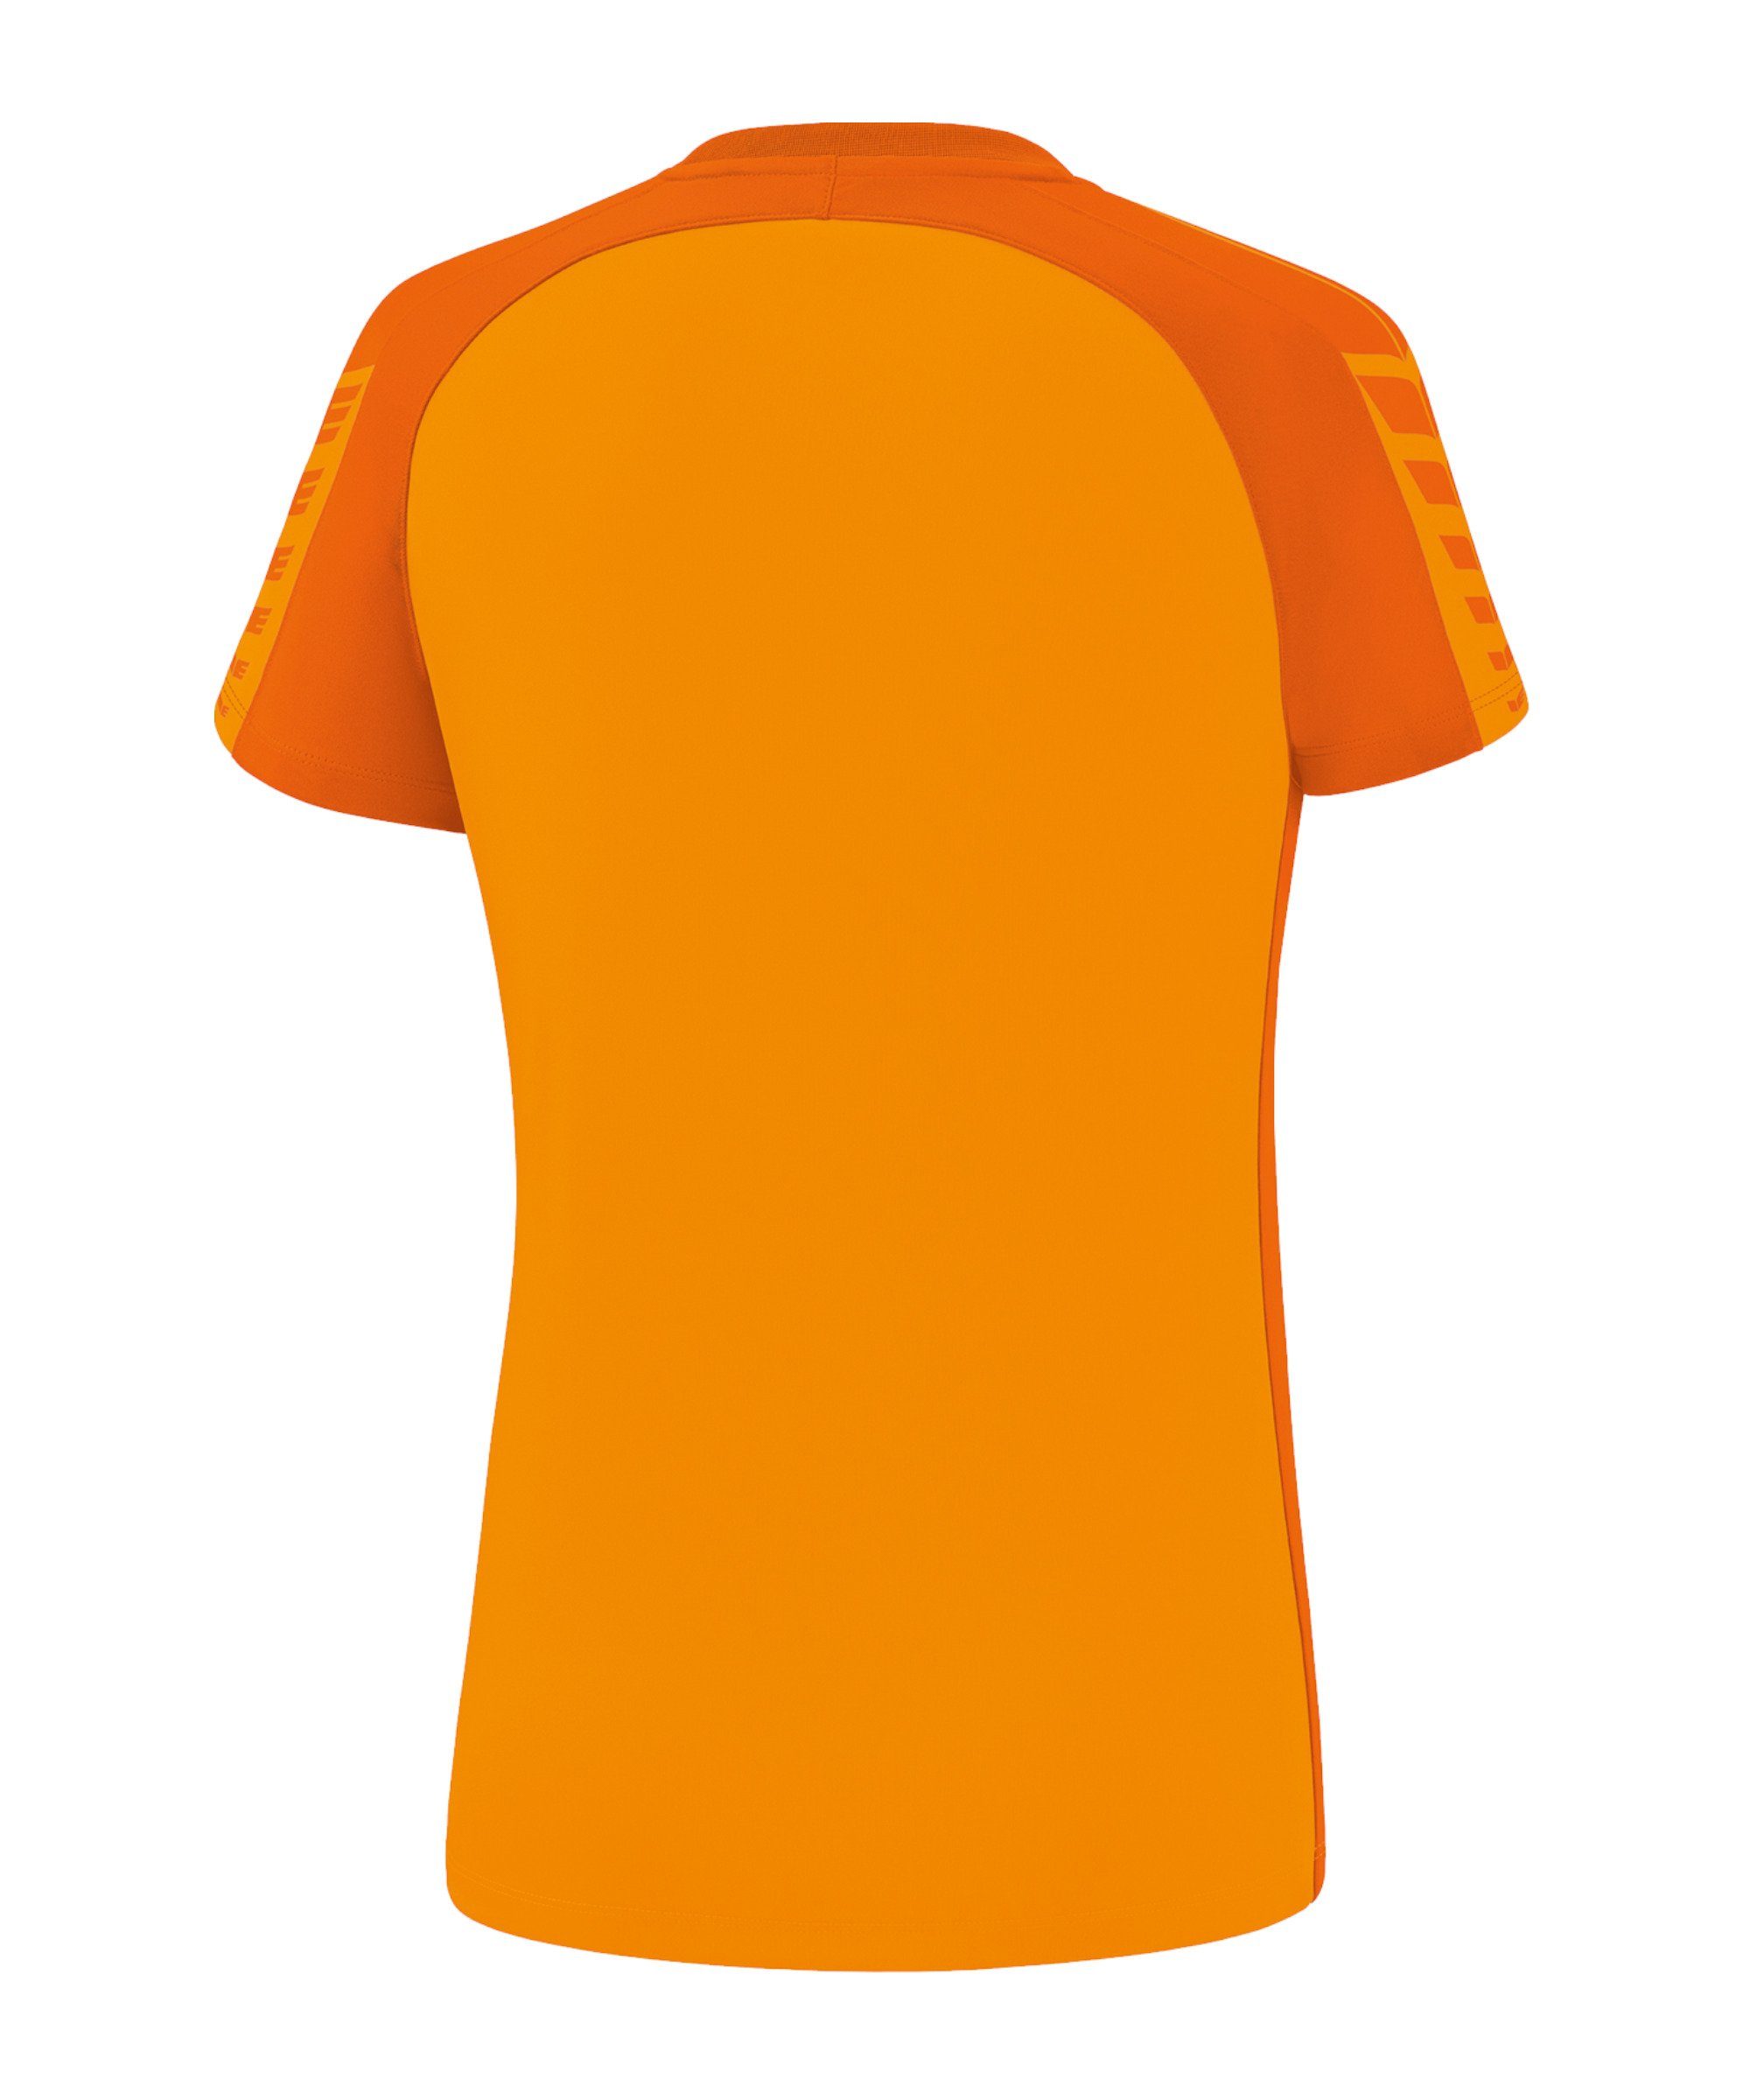 Erima T-Shirt Six T-Shirt orangeorange default Wings Damen